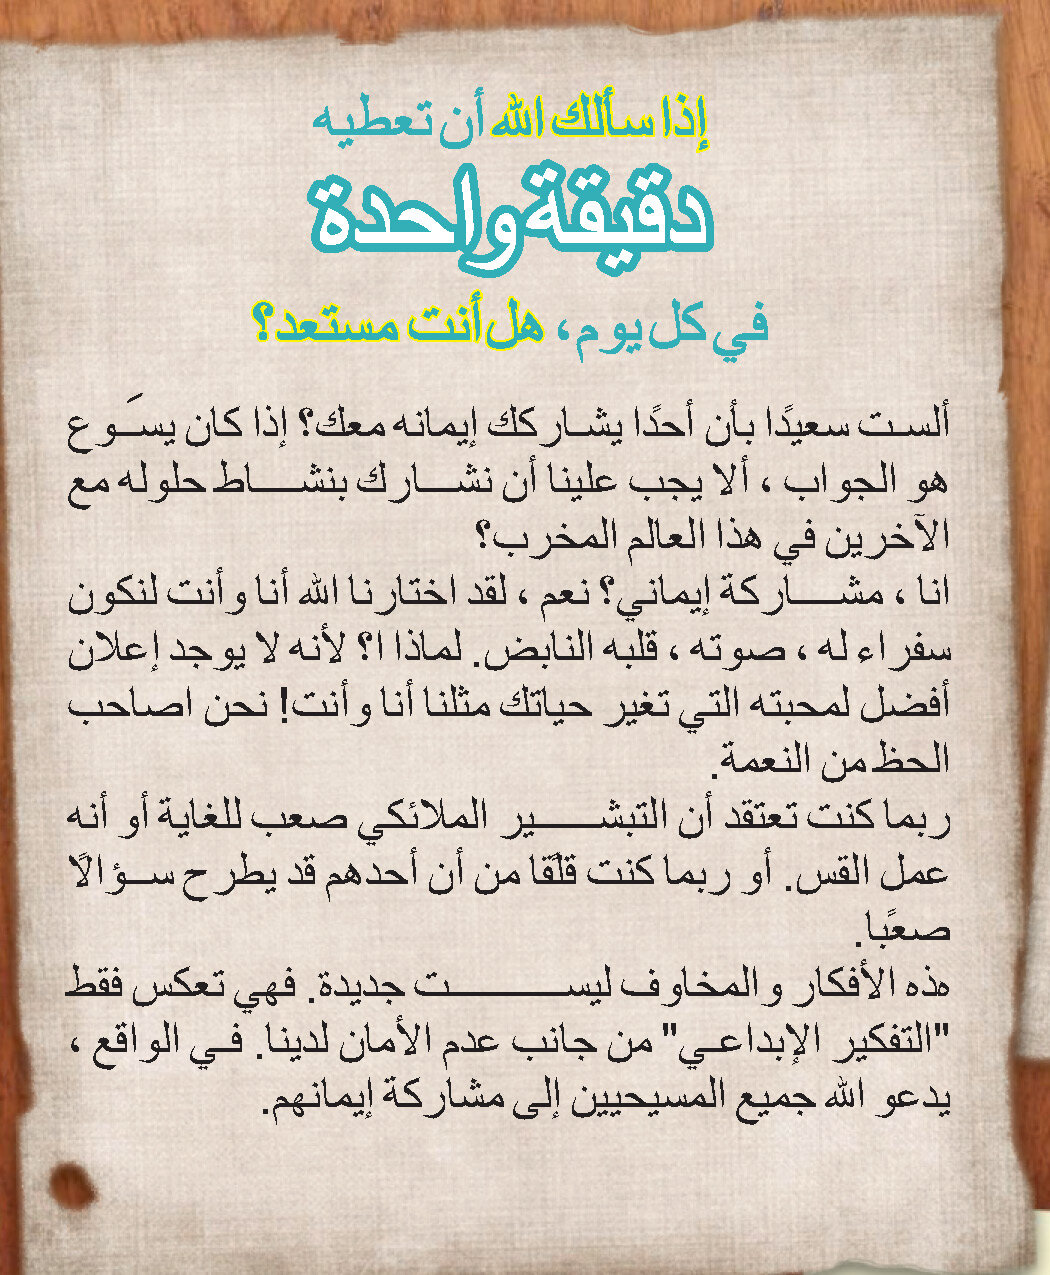 Arabic_Zubi_CDR-based_Page_02.jpg